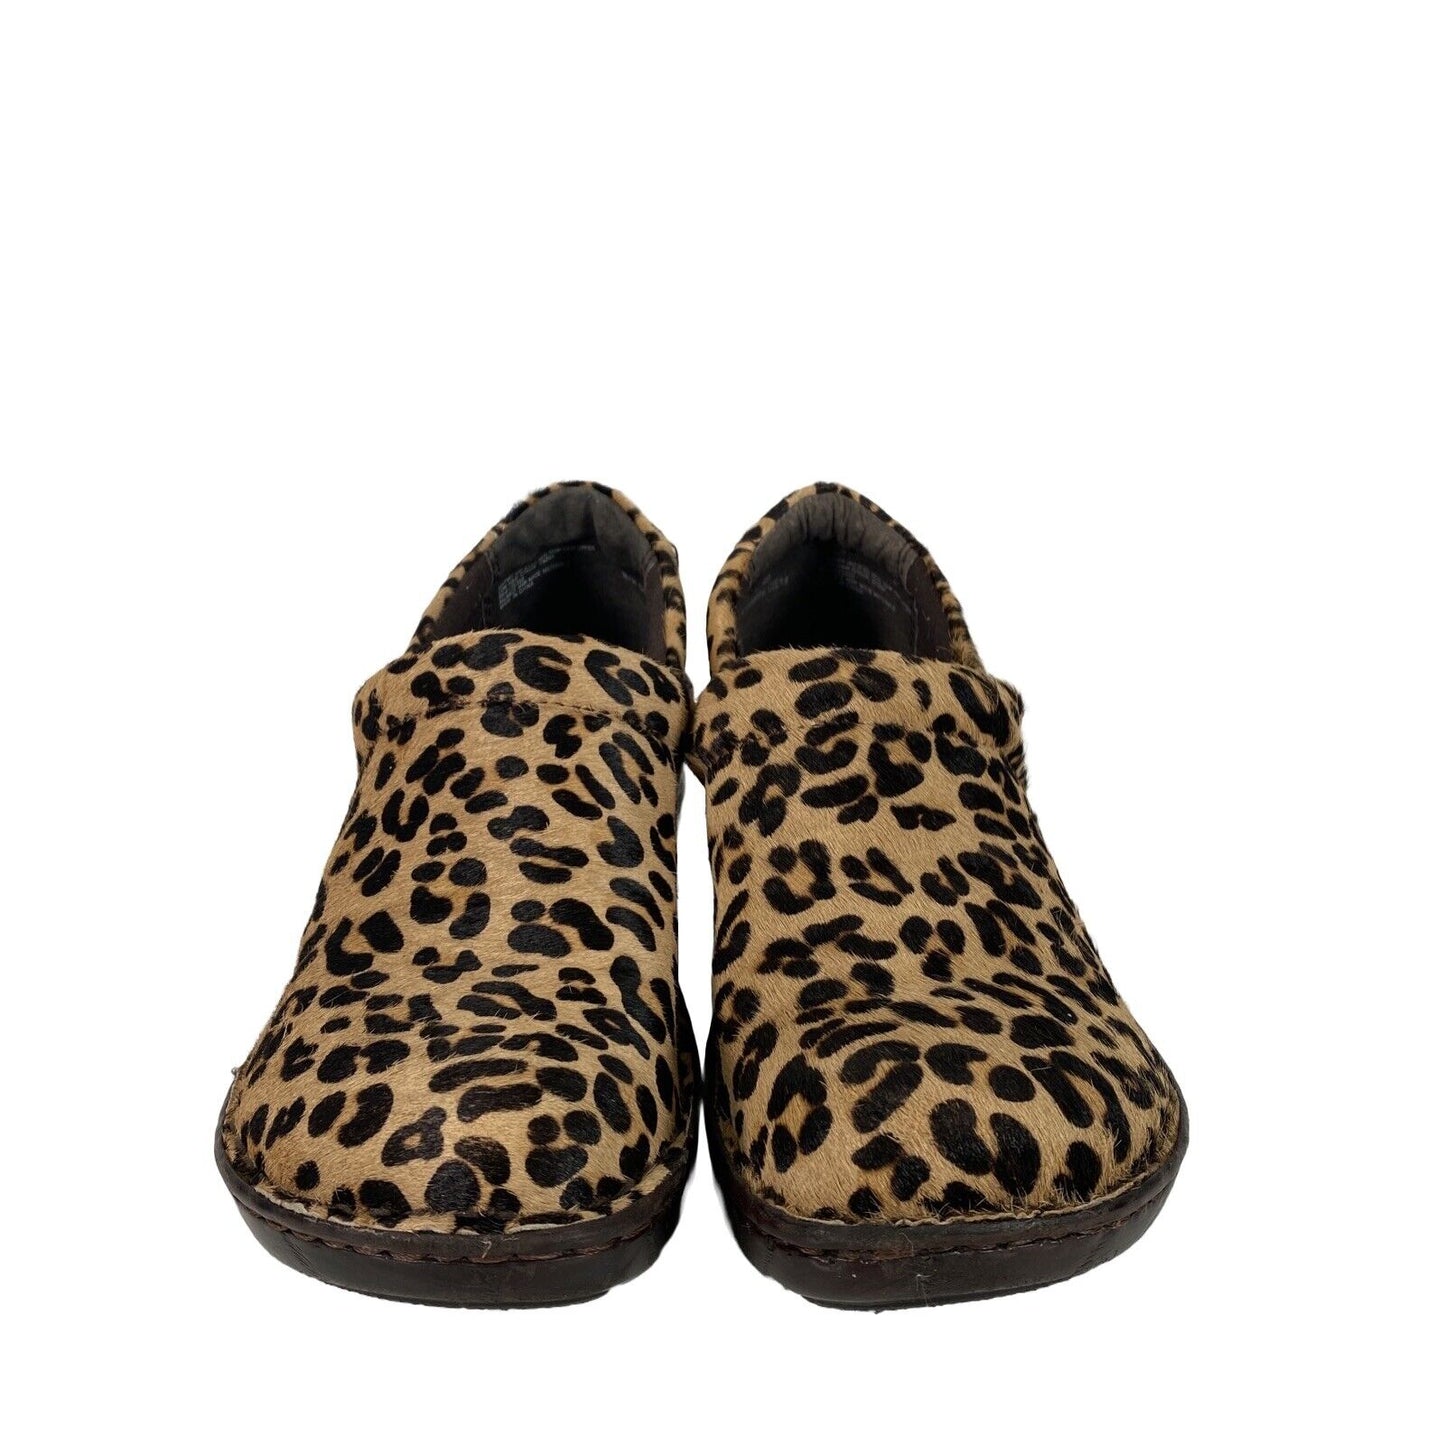 BOC Women's Beige Animal Print Cow Hair Comfort Shoes Clogs - 40/8.5